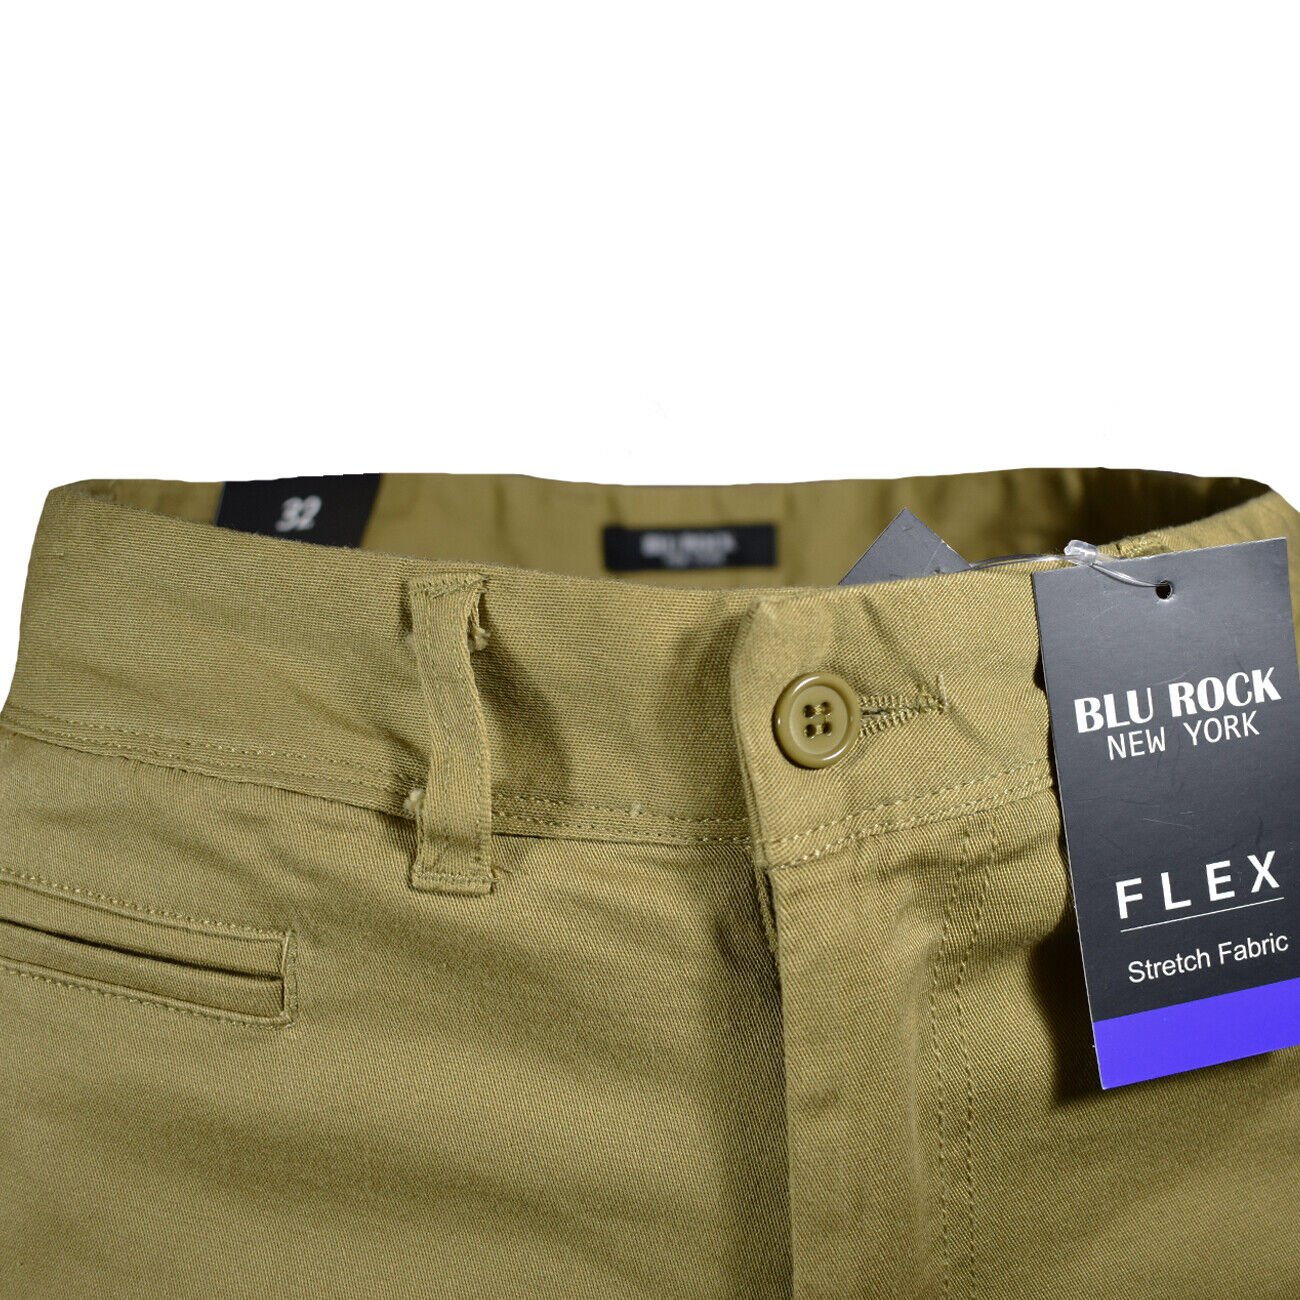 Blu Rock Flex Fit Shorts - Tan 5 Pockets - Men's